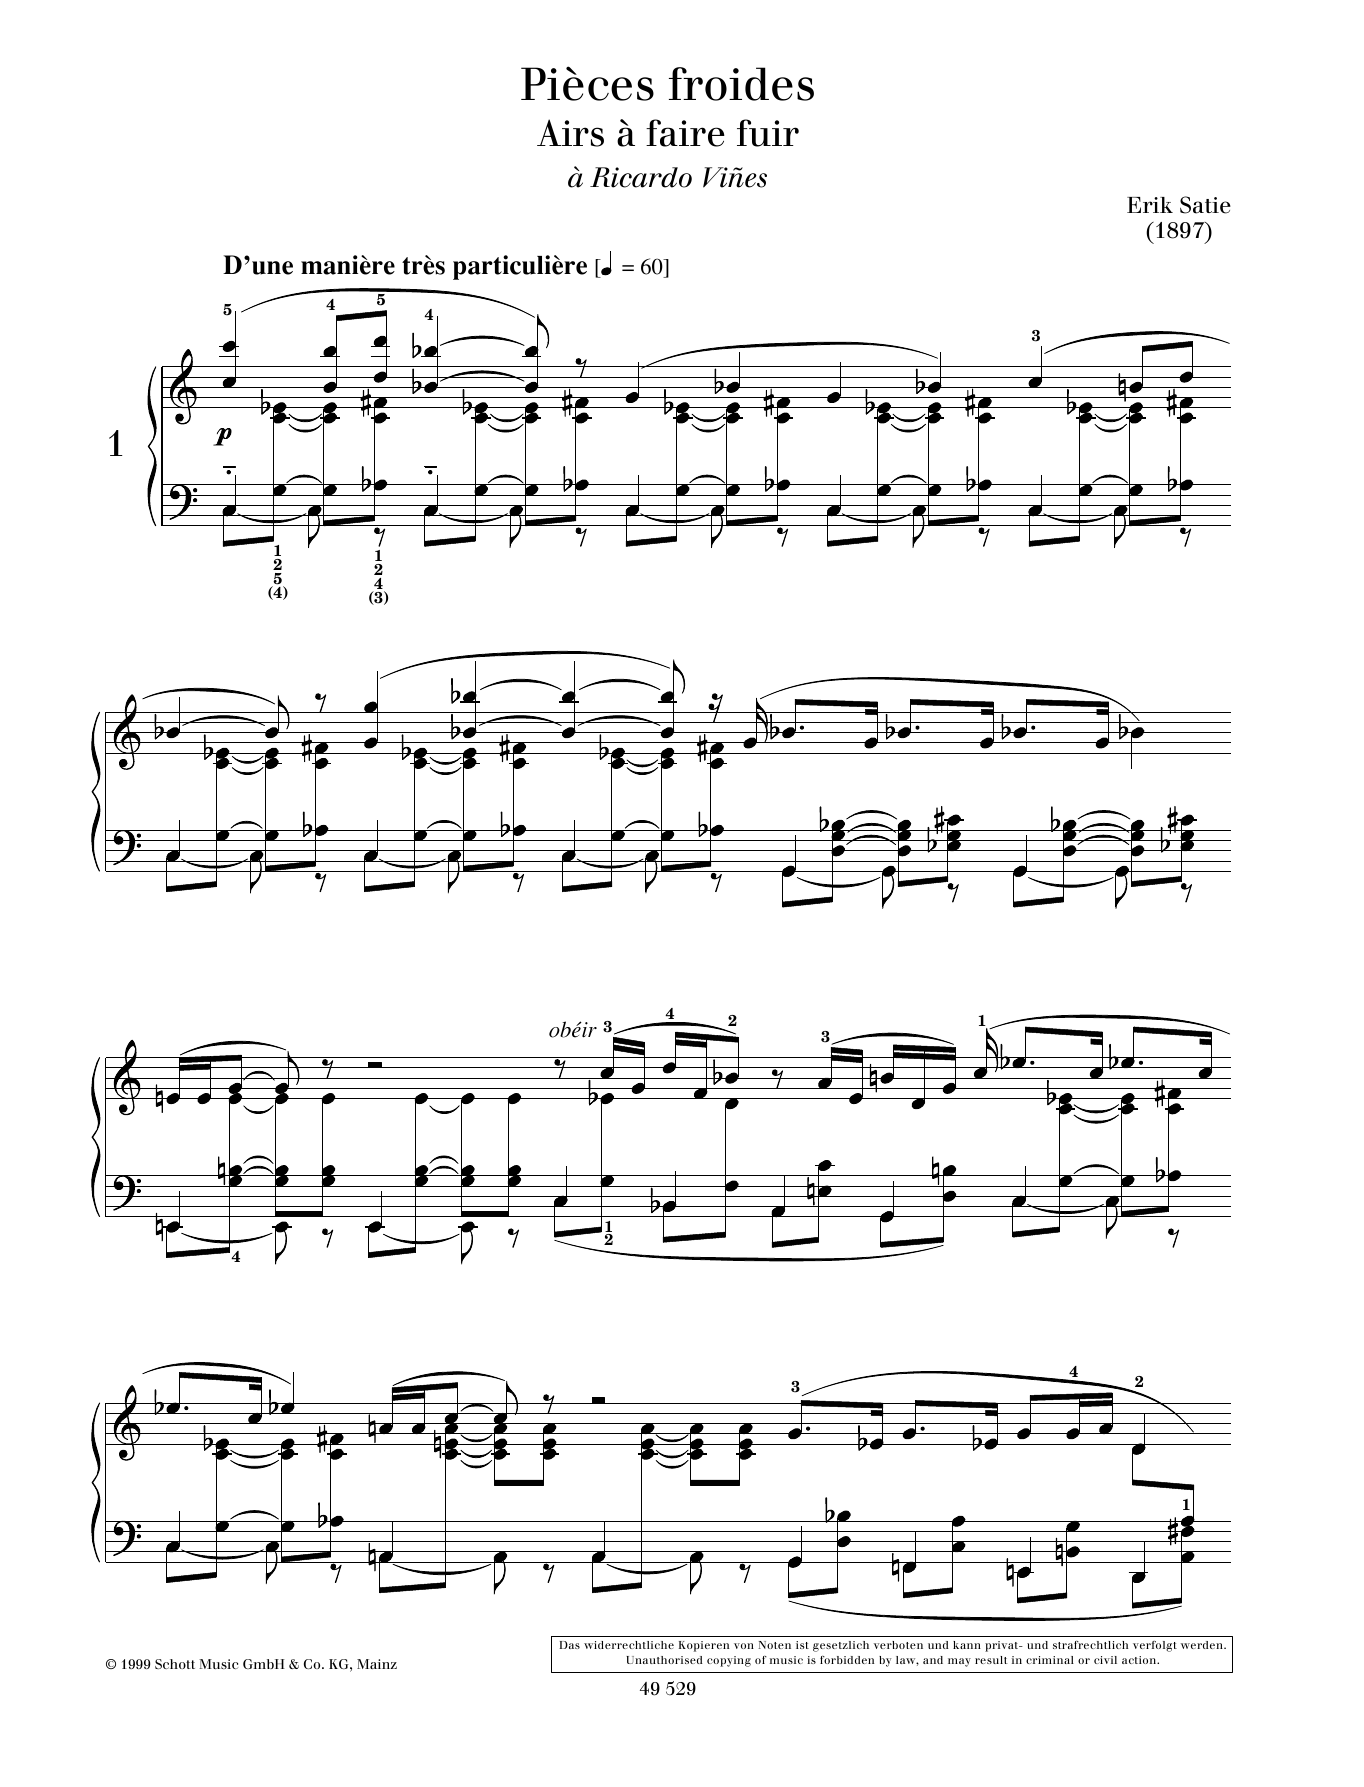 Erik Satie Air à faire fuir No. 1 Sheet Music Notes & Chords for Piano Solo - Download or Print PDF